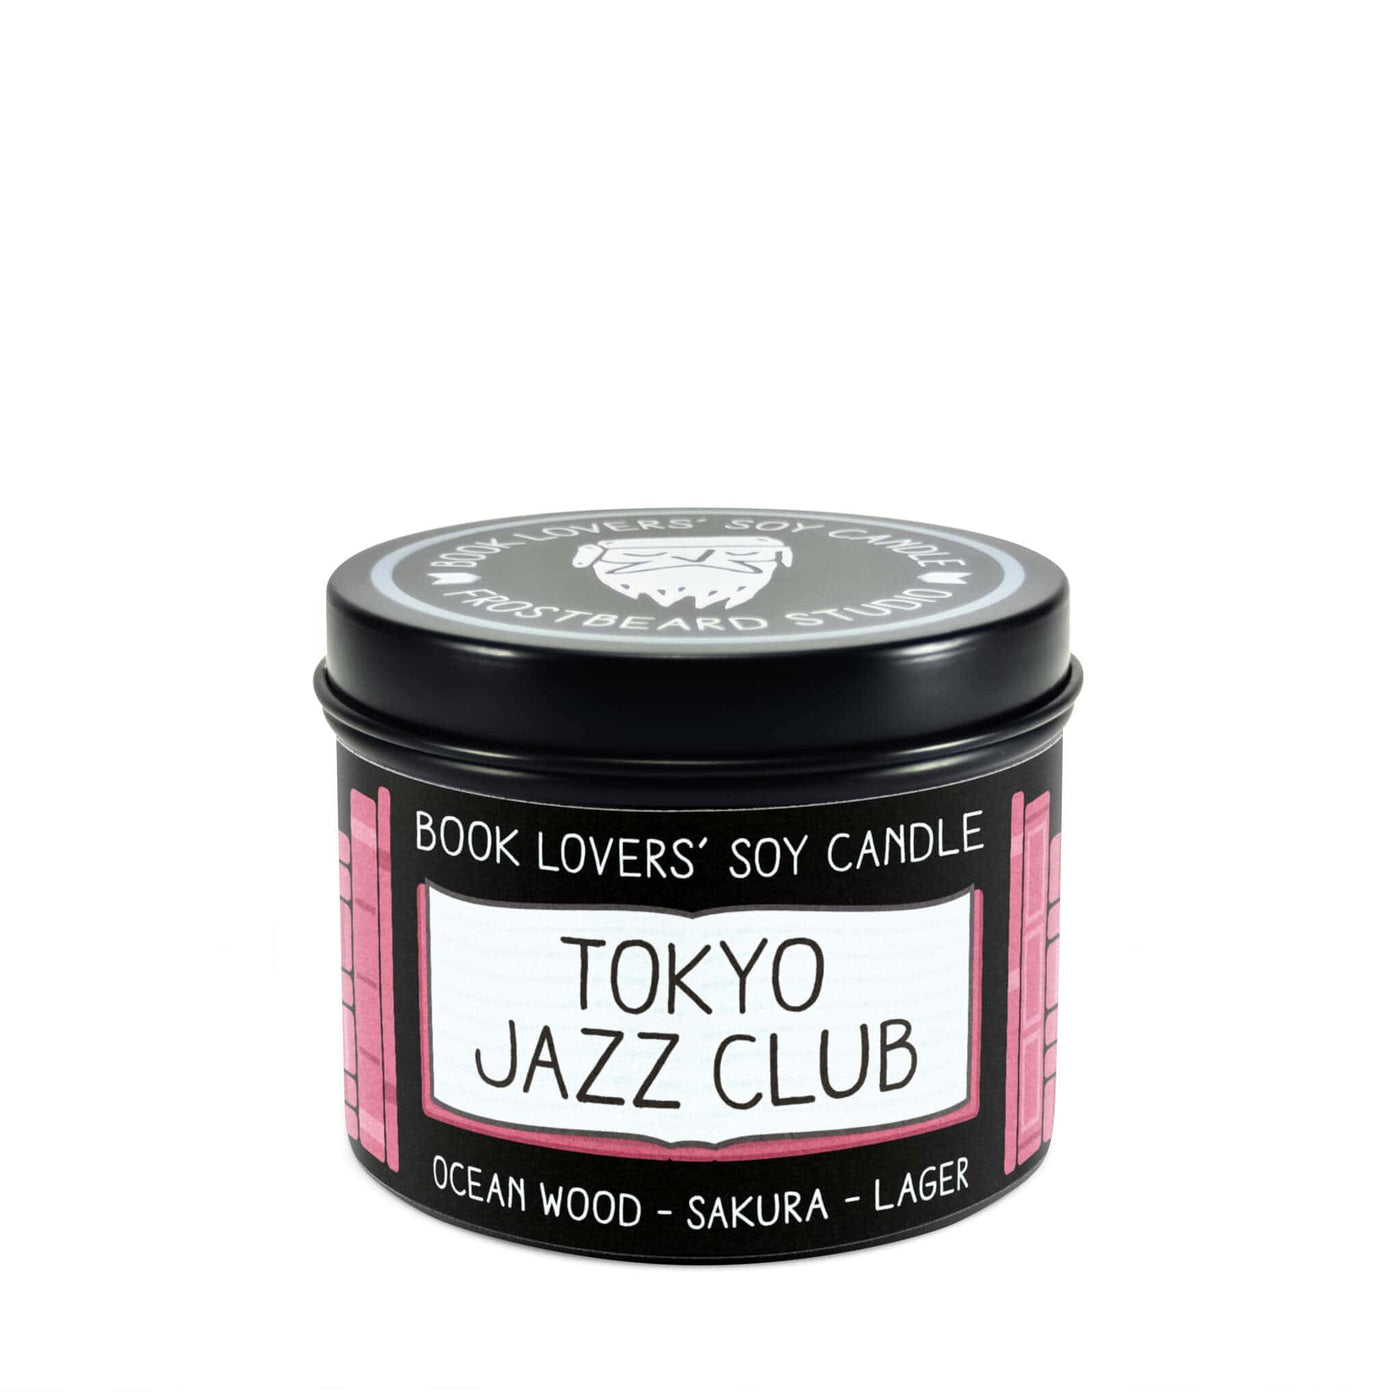 Tokyo Jazz Club  -  4 oz Tin  -  Book Lovers' Soy Candle  -  Frostbeard Studio